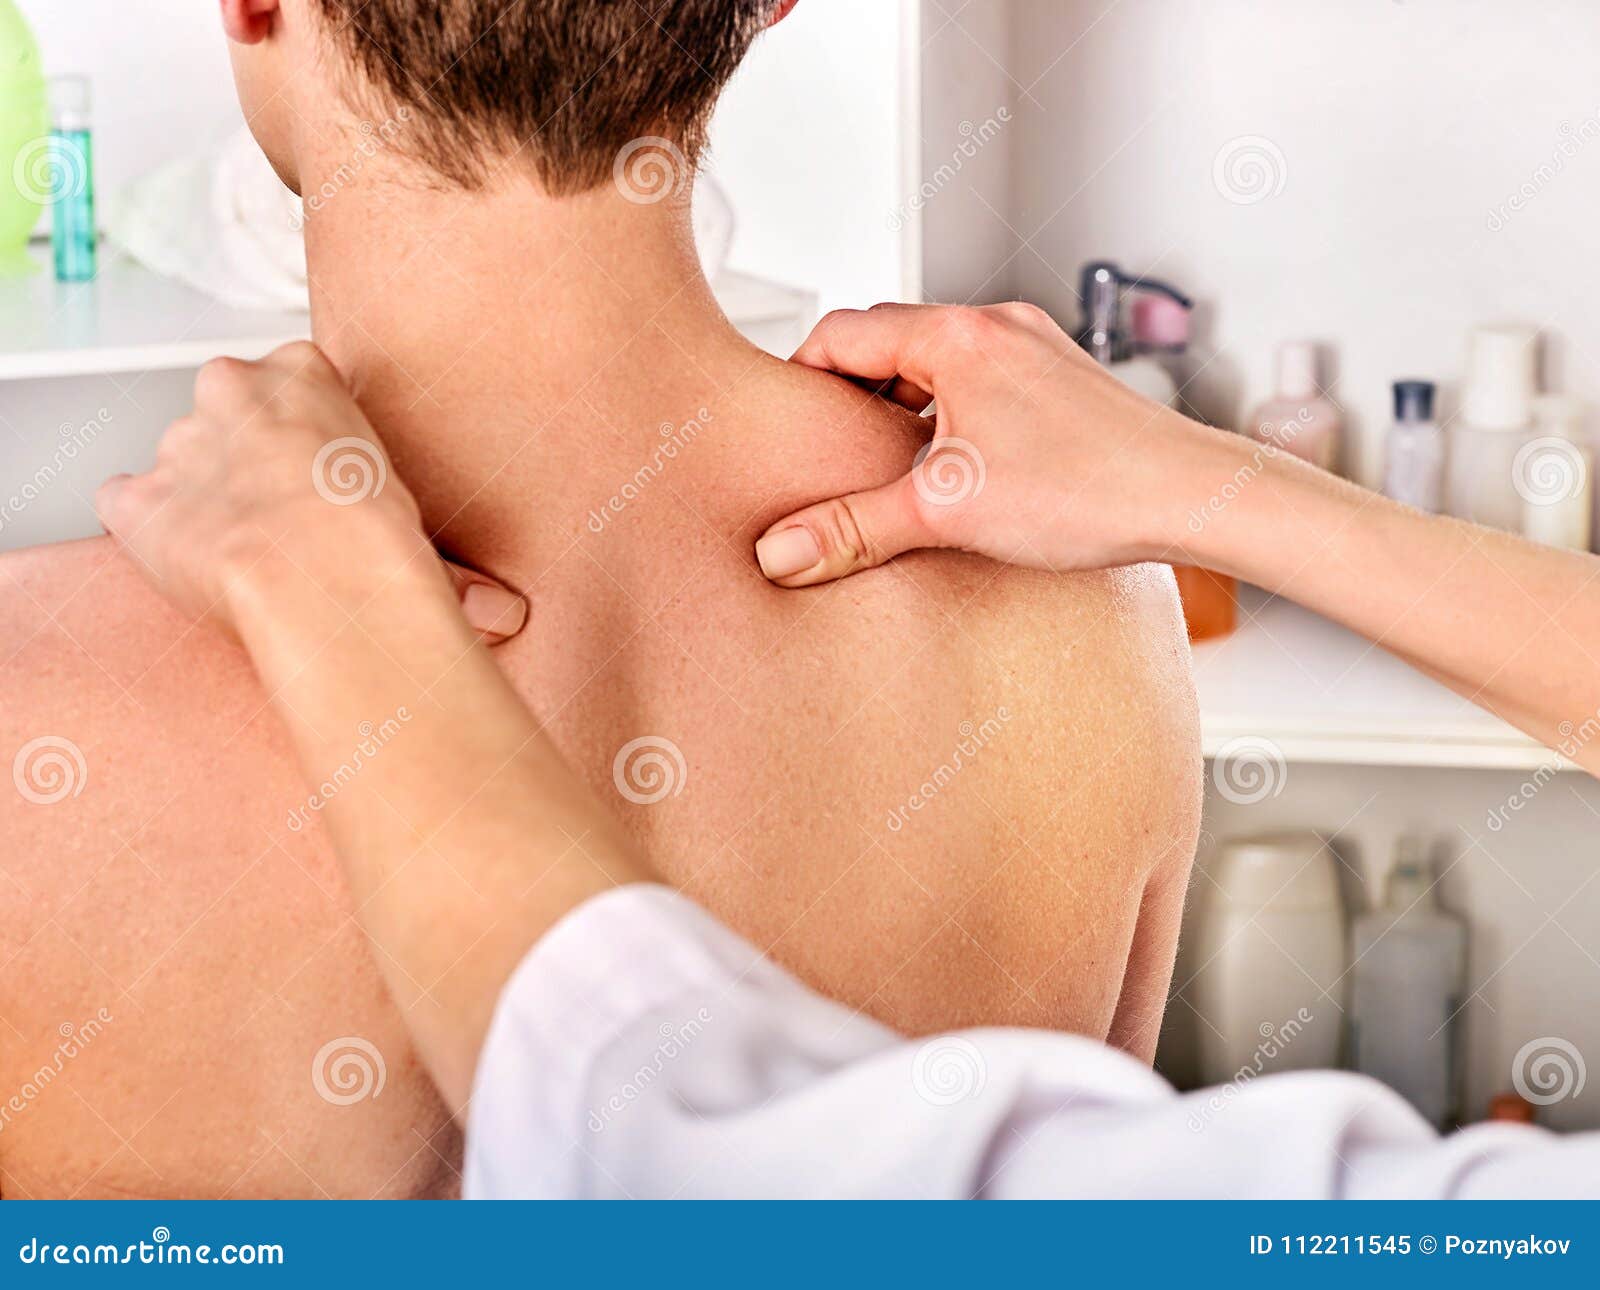 https://thumbs.dreamstime.com/z/shoulder-neck-massage-women-spa-salon-doctor-making-therapy-rehabilitation-center-reinforcement-joint-good-clinic-112211545.jpg